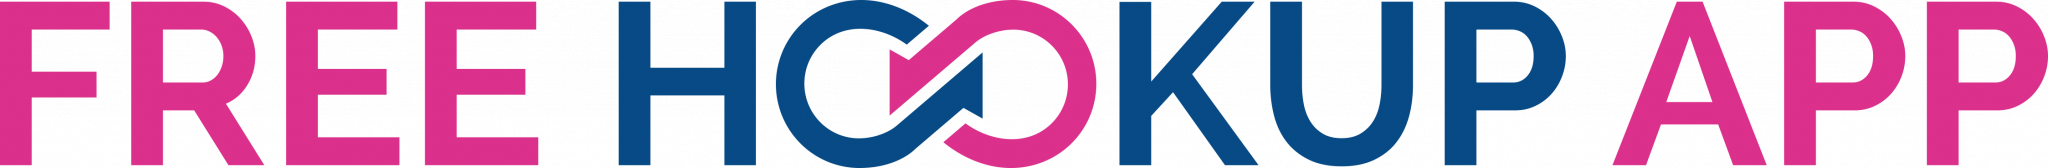 logo for hookup app